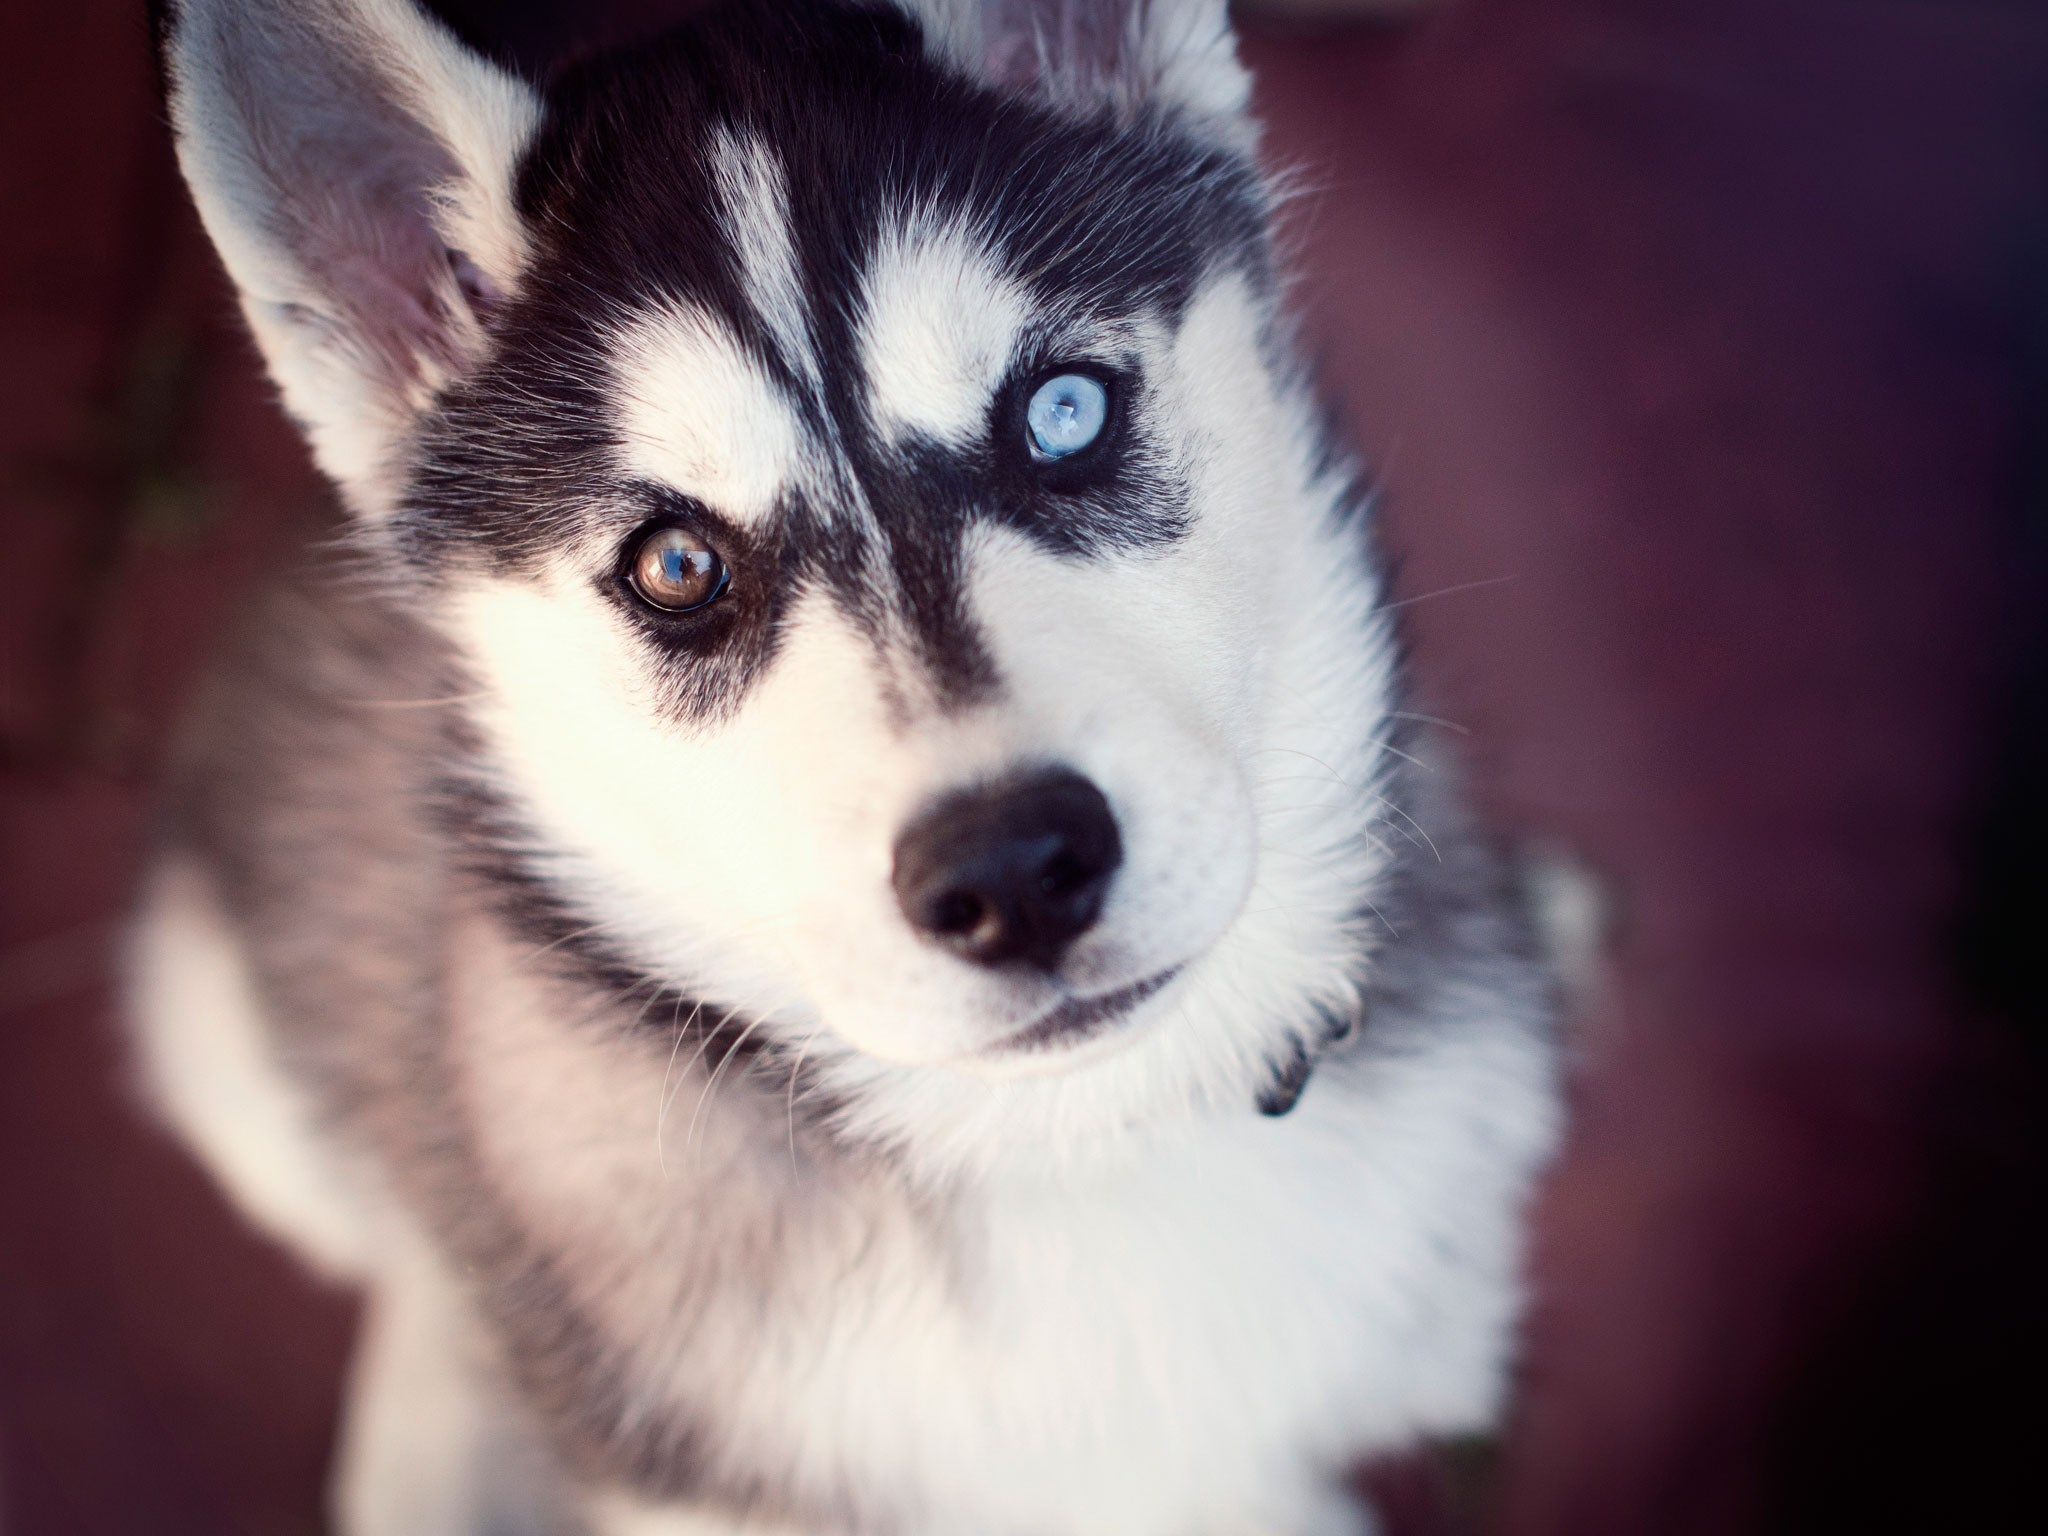 husky wallpaper desktop background. Cute husky puppies, Husky with blue eyes, Husky puppy